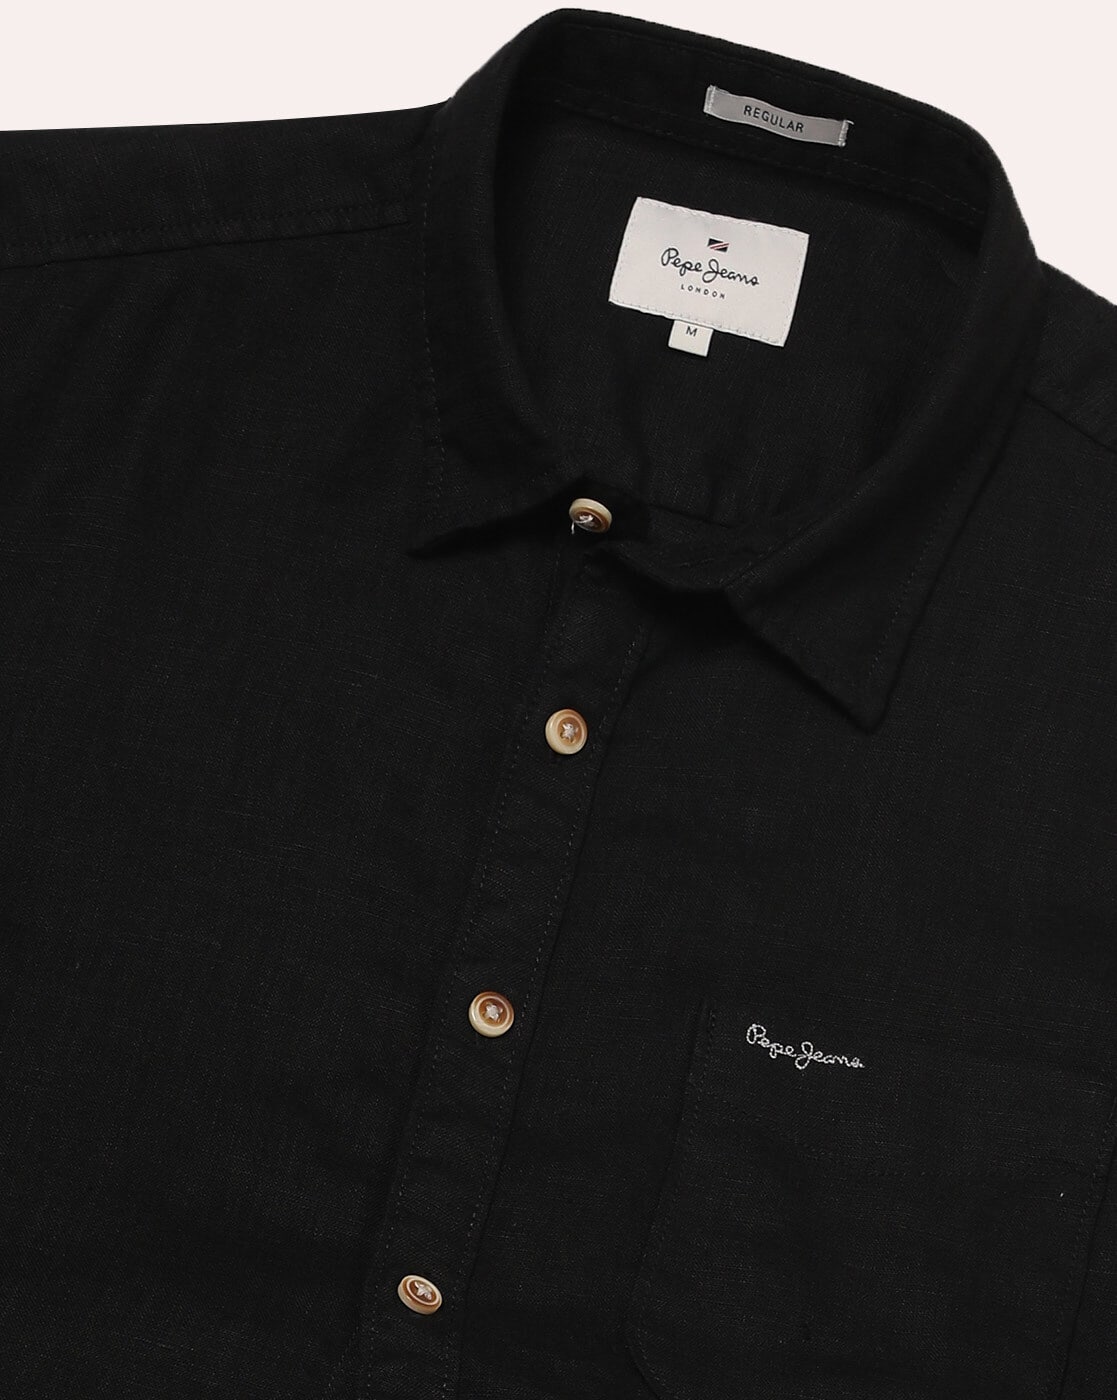 Pepe Jeans Original Stretch T-Shirts & Polo Shirts Men Black - XS -  Short-Sleeved T-Shirts Shirt at Amazon Men's Clothing store